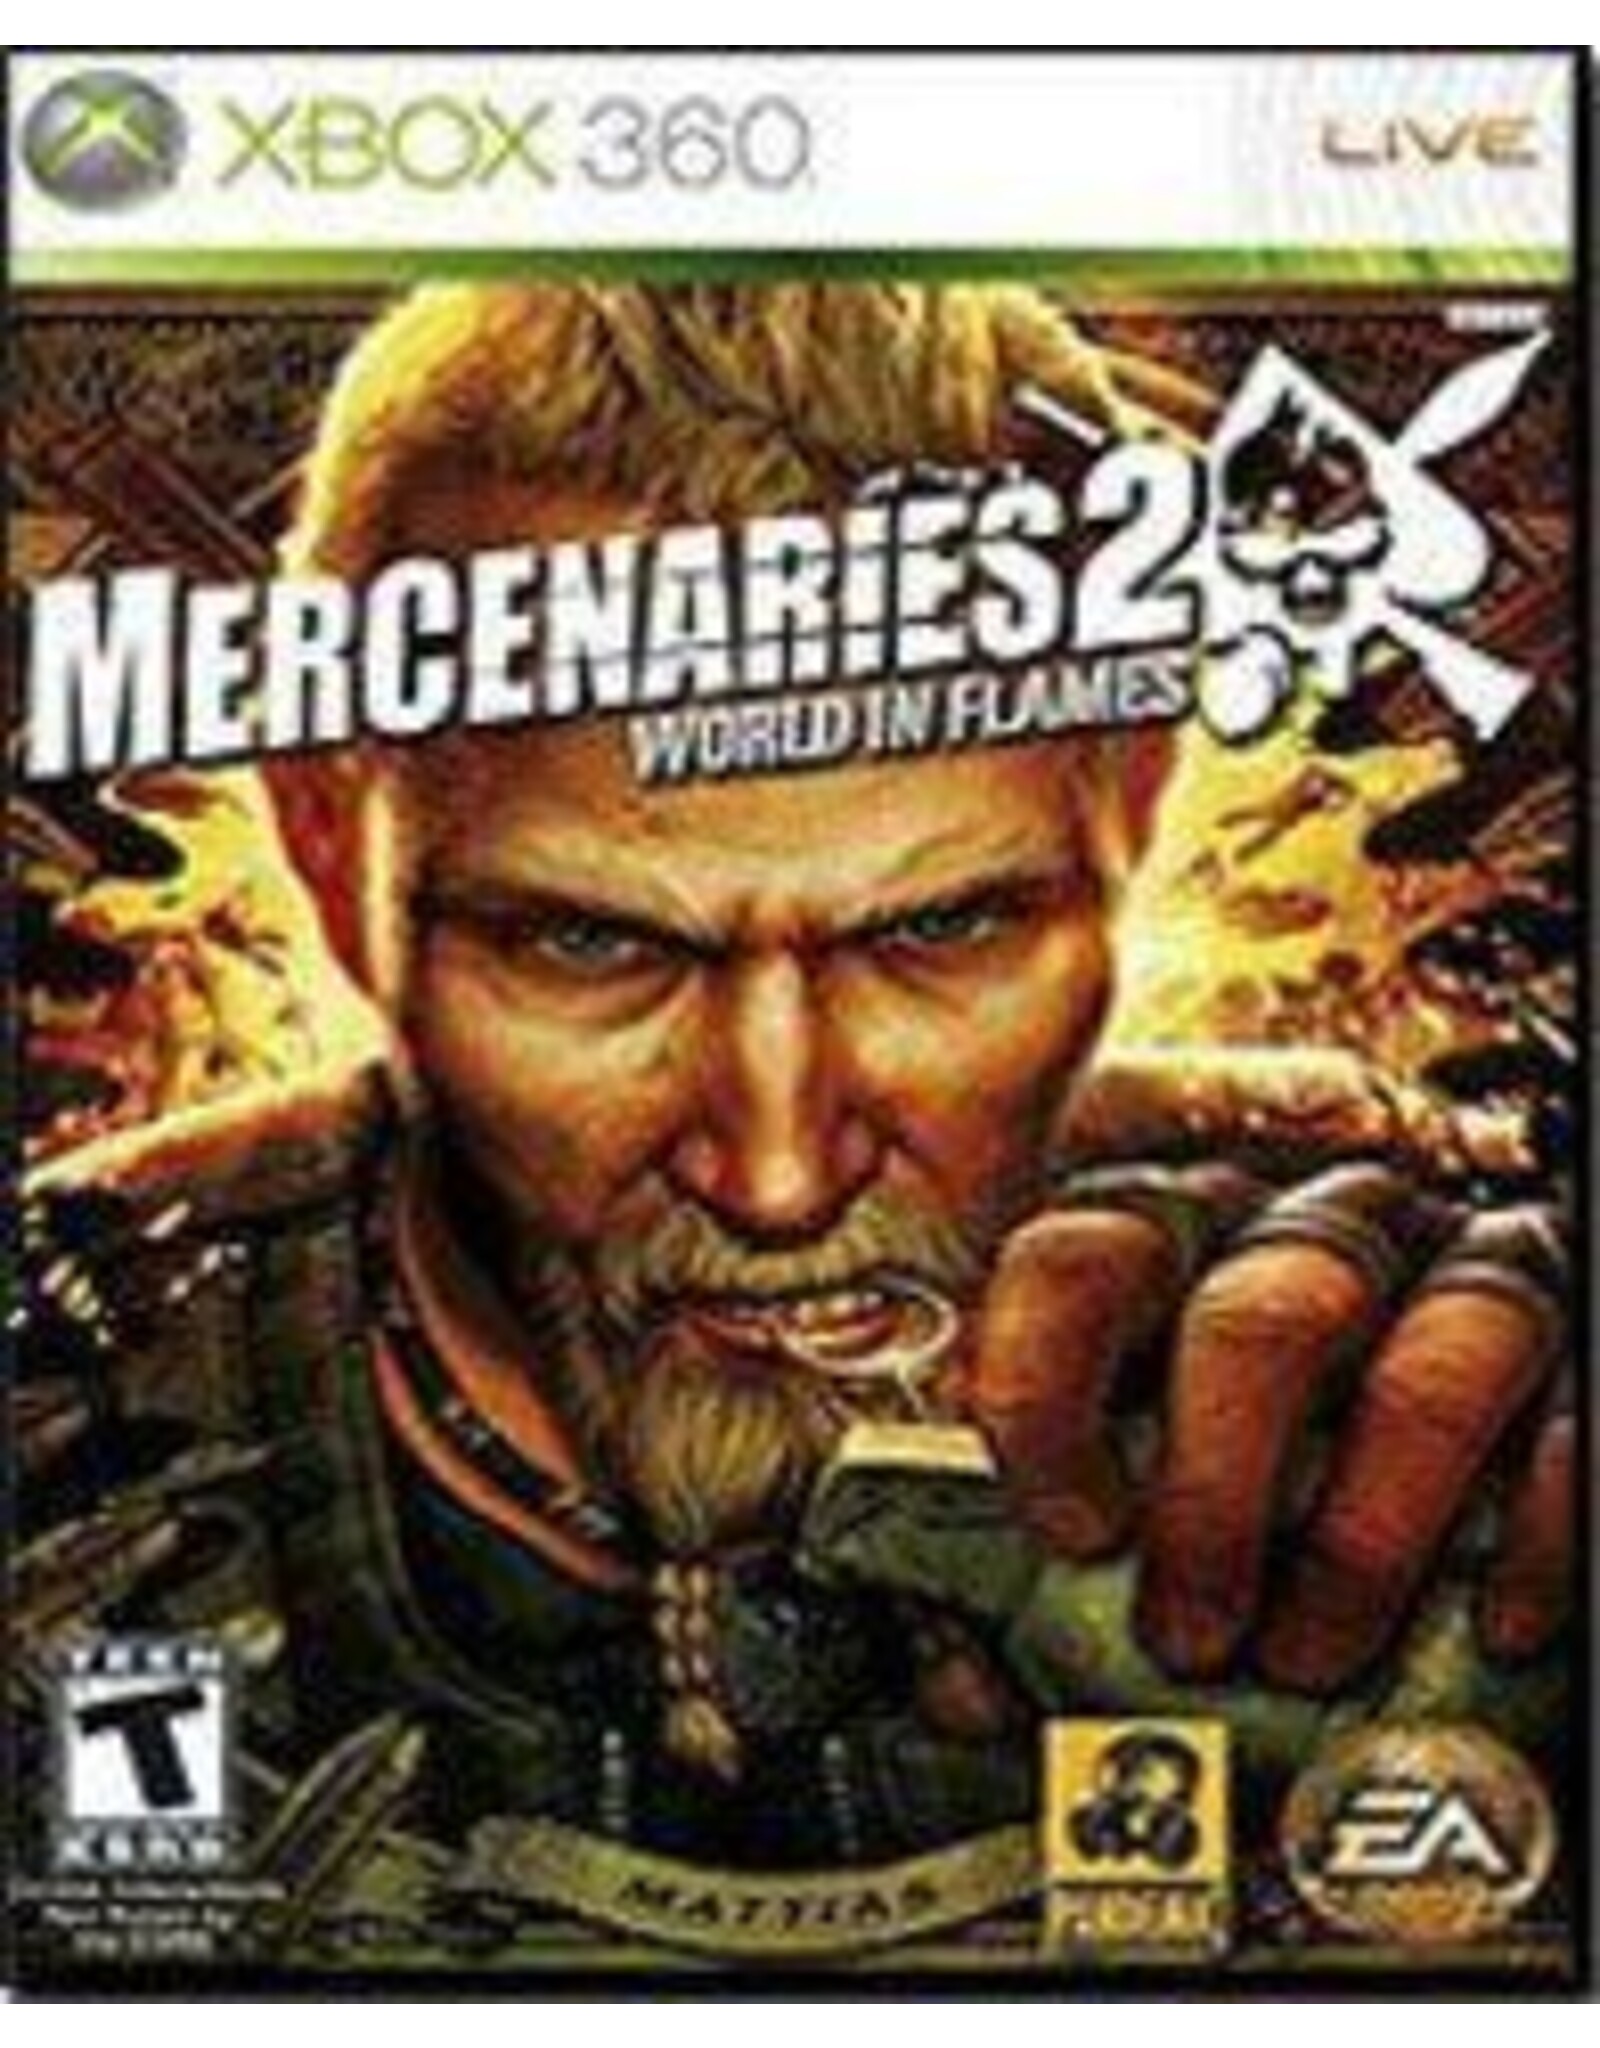 Xbox 360 Mercenaries 2 World in Flames (Used, No Manual)